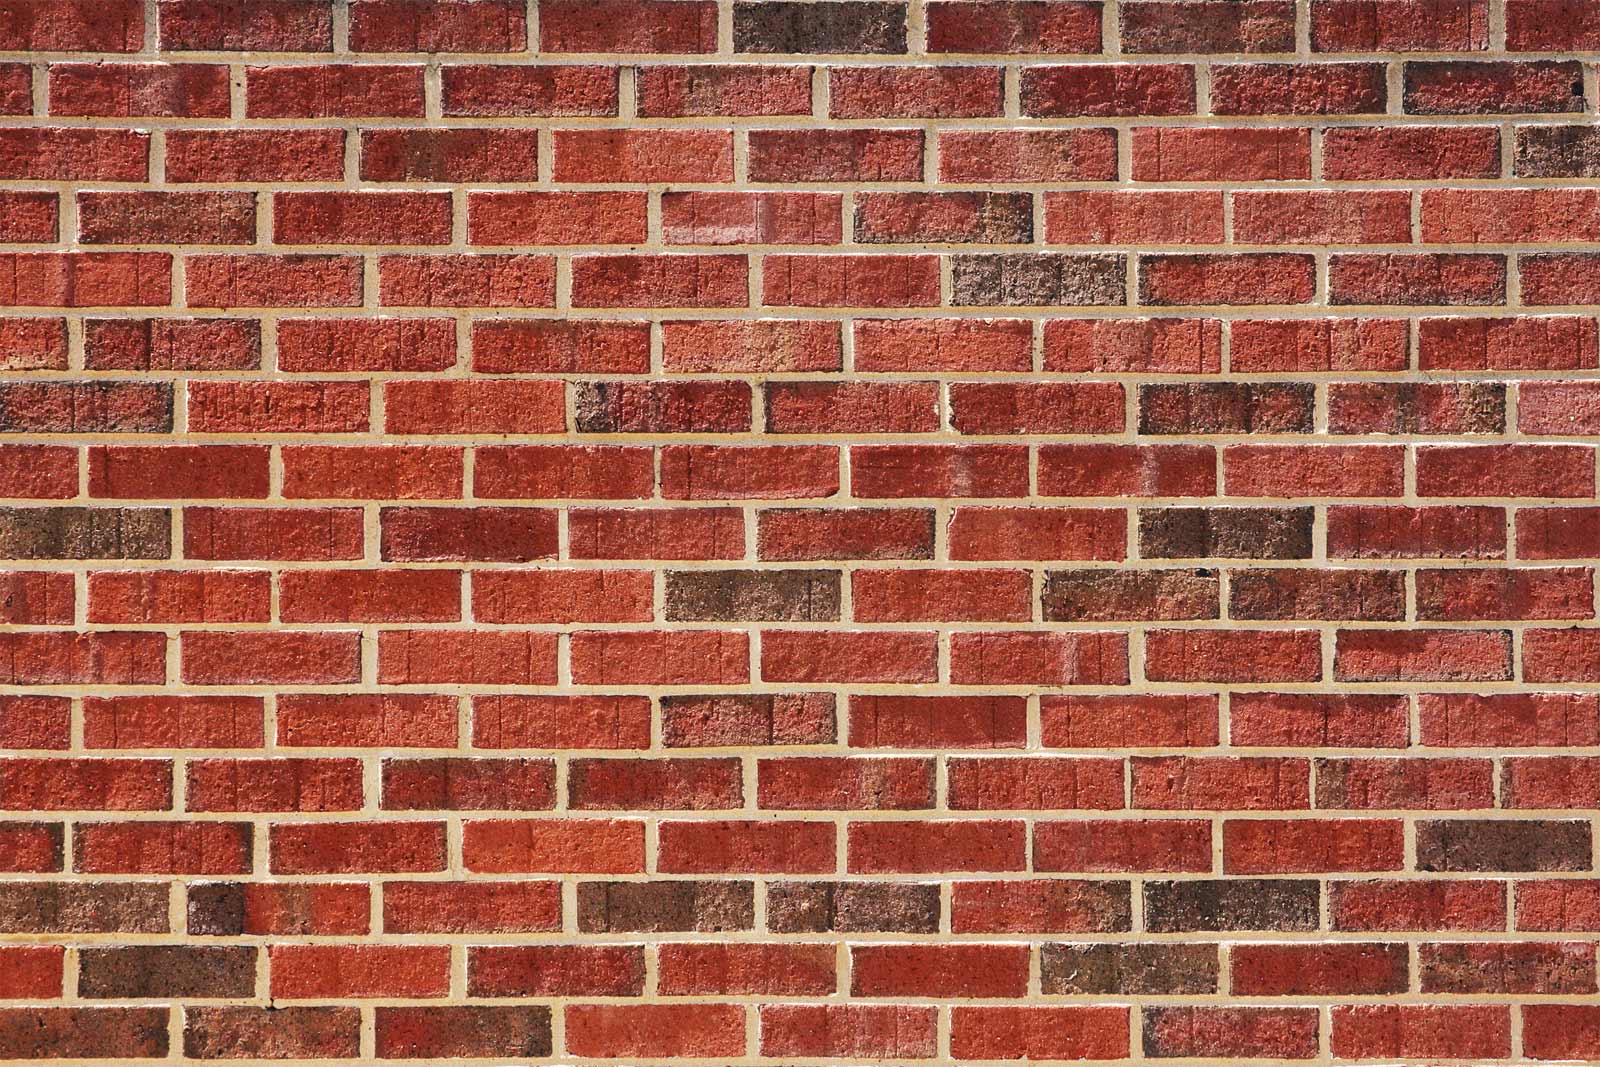 Absolute Brick Wall Designs